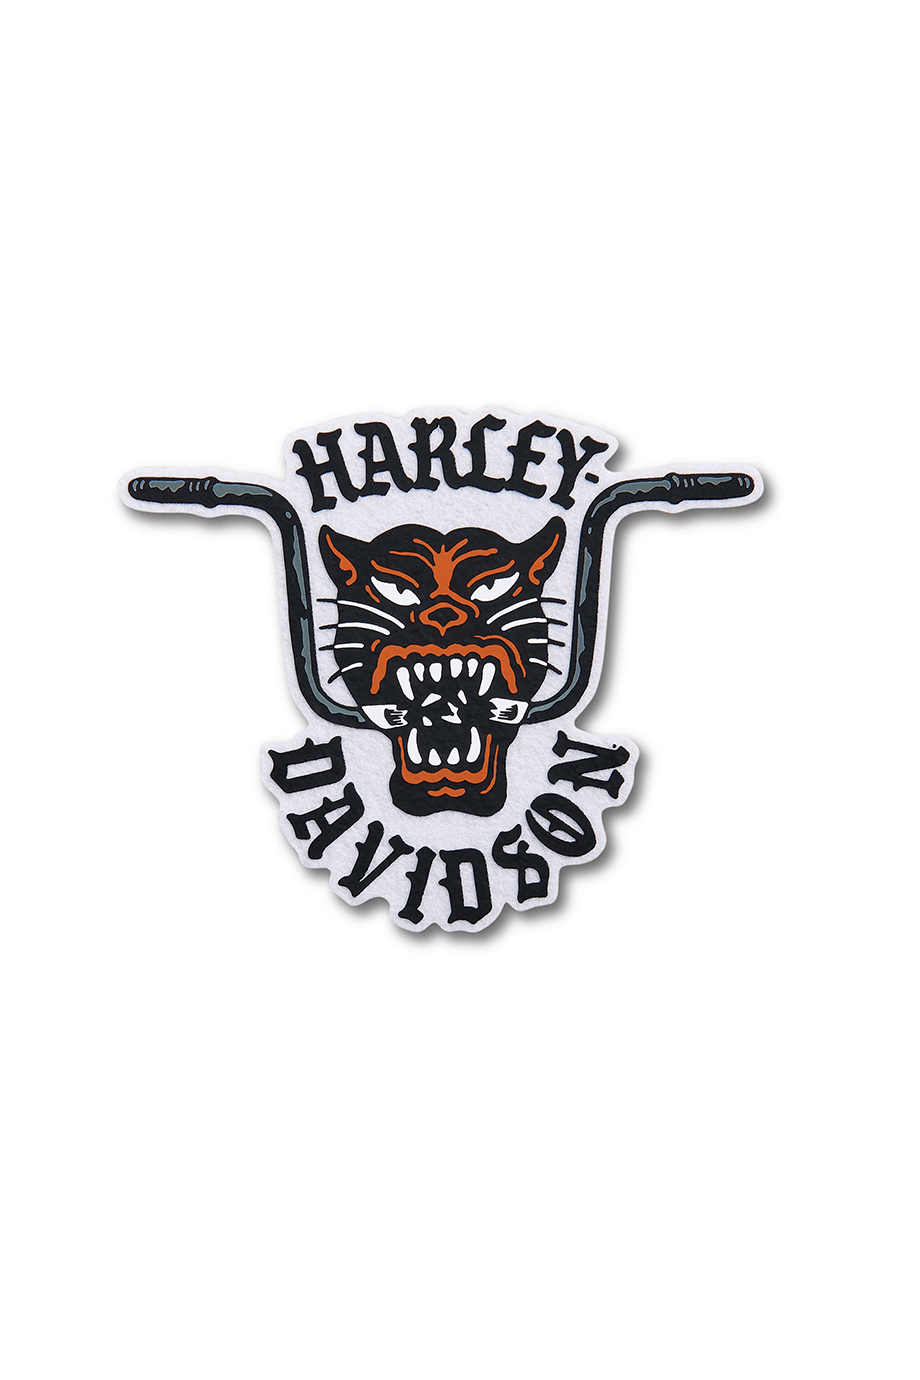 Harley-Davidson® Patch Multi Color